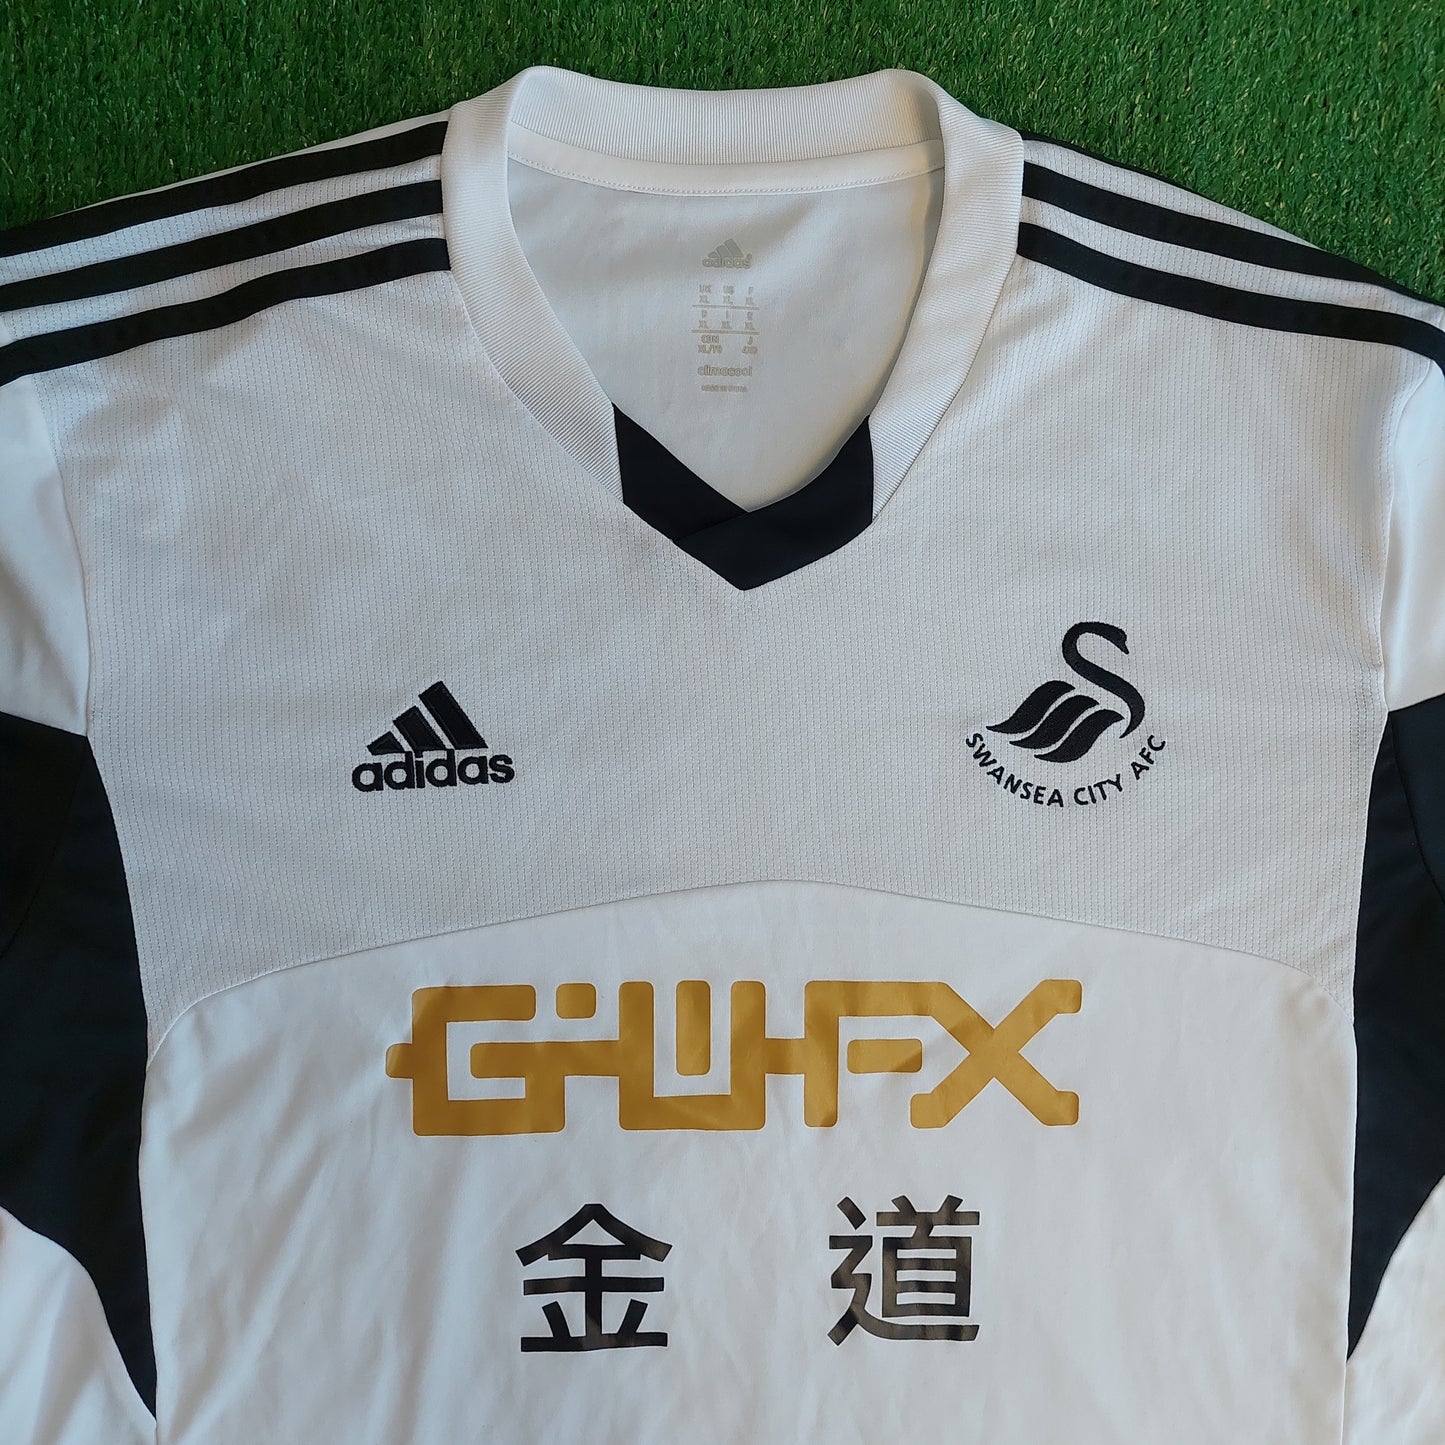 Swansea City 2013/14 Home Shirt (Very Good) - Size XL